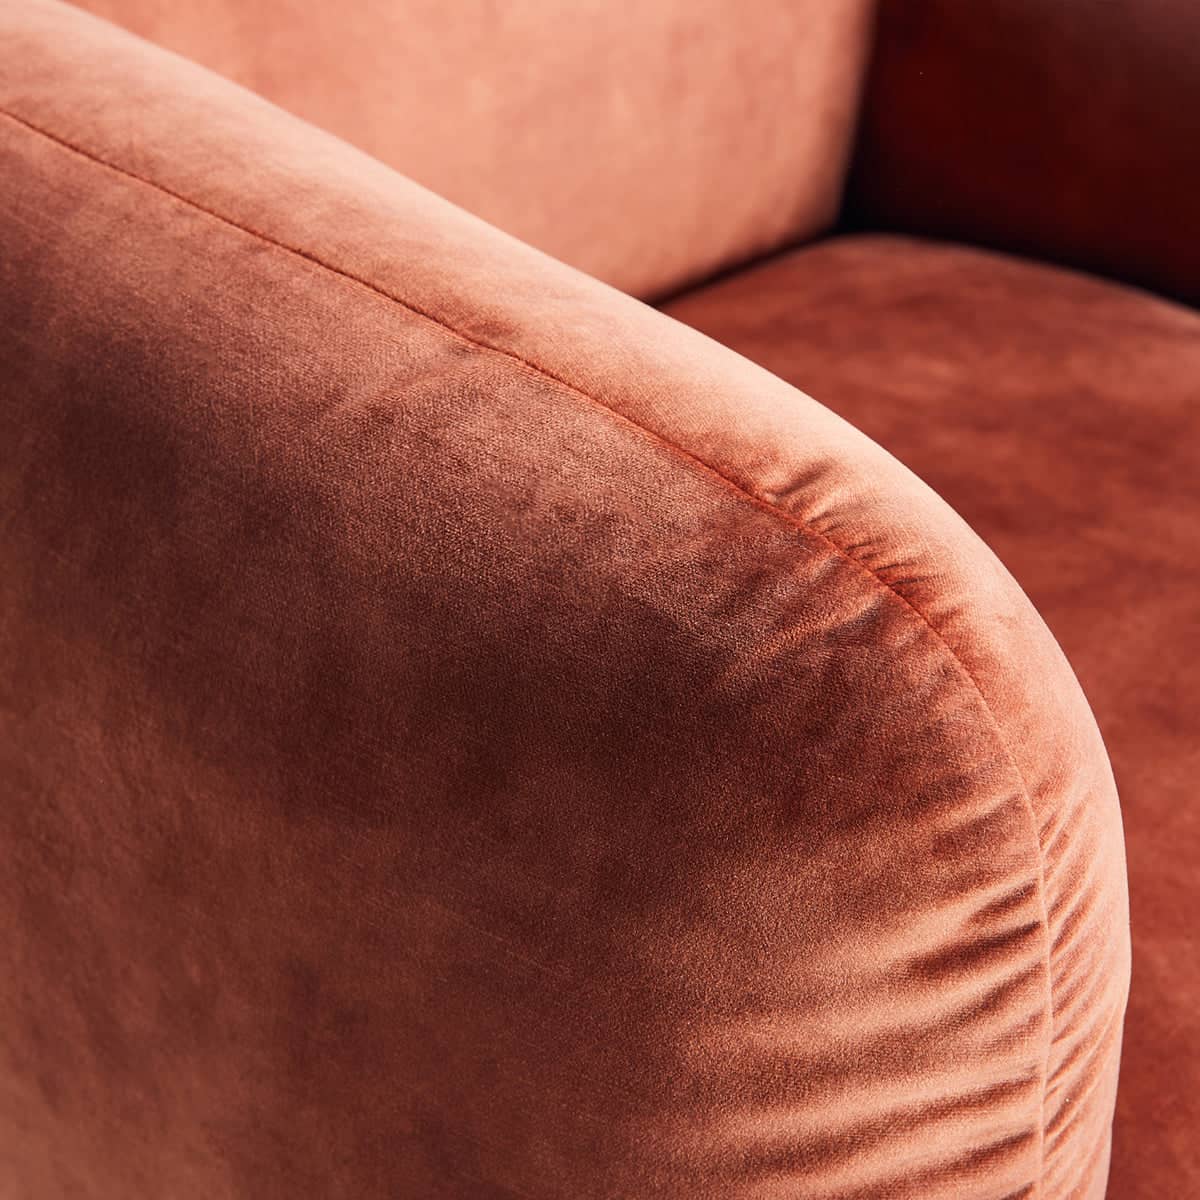 Tulip Lounge Chair - Decent Cinnamon